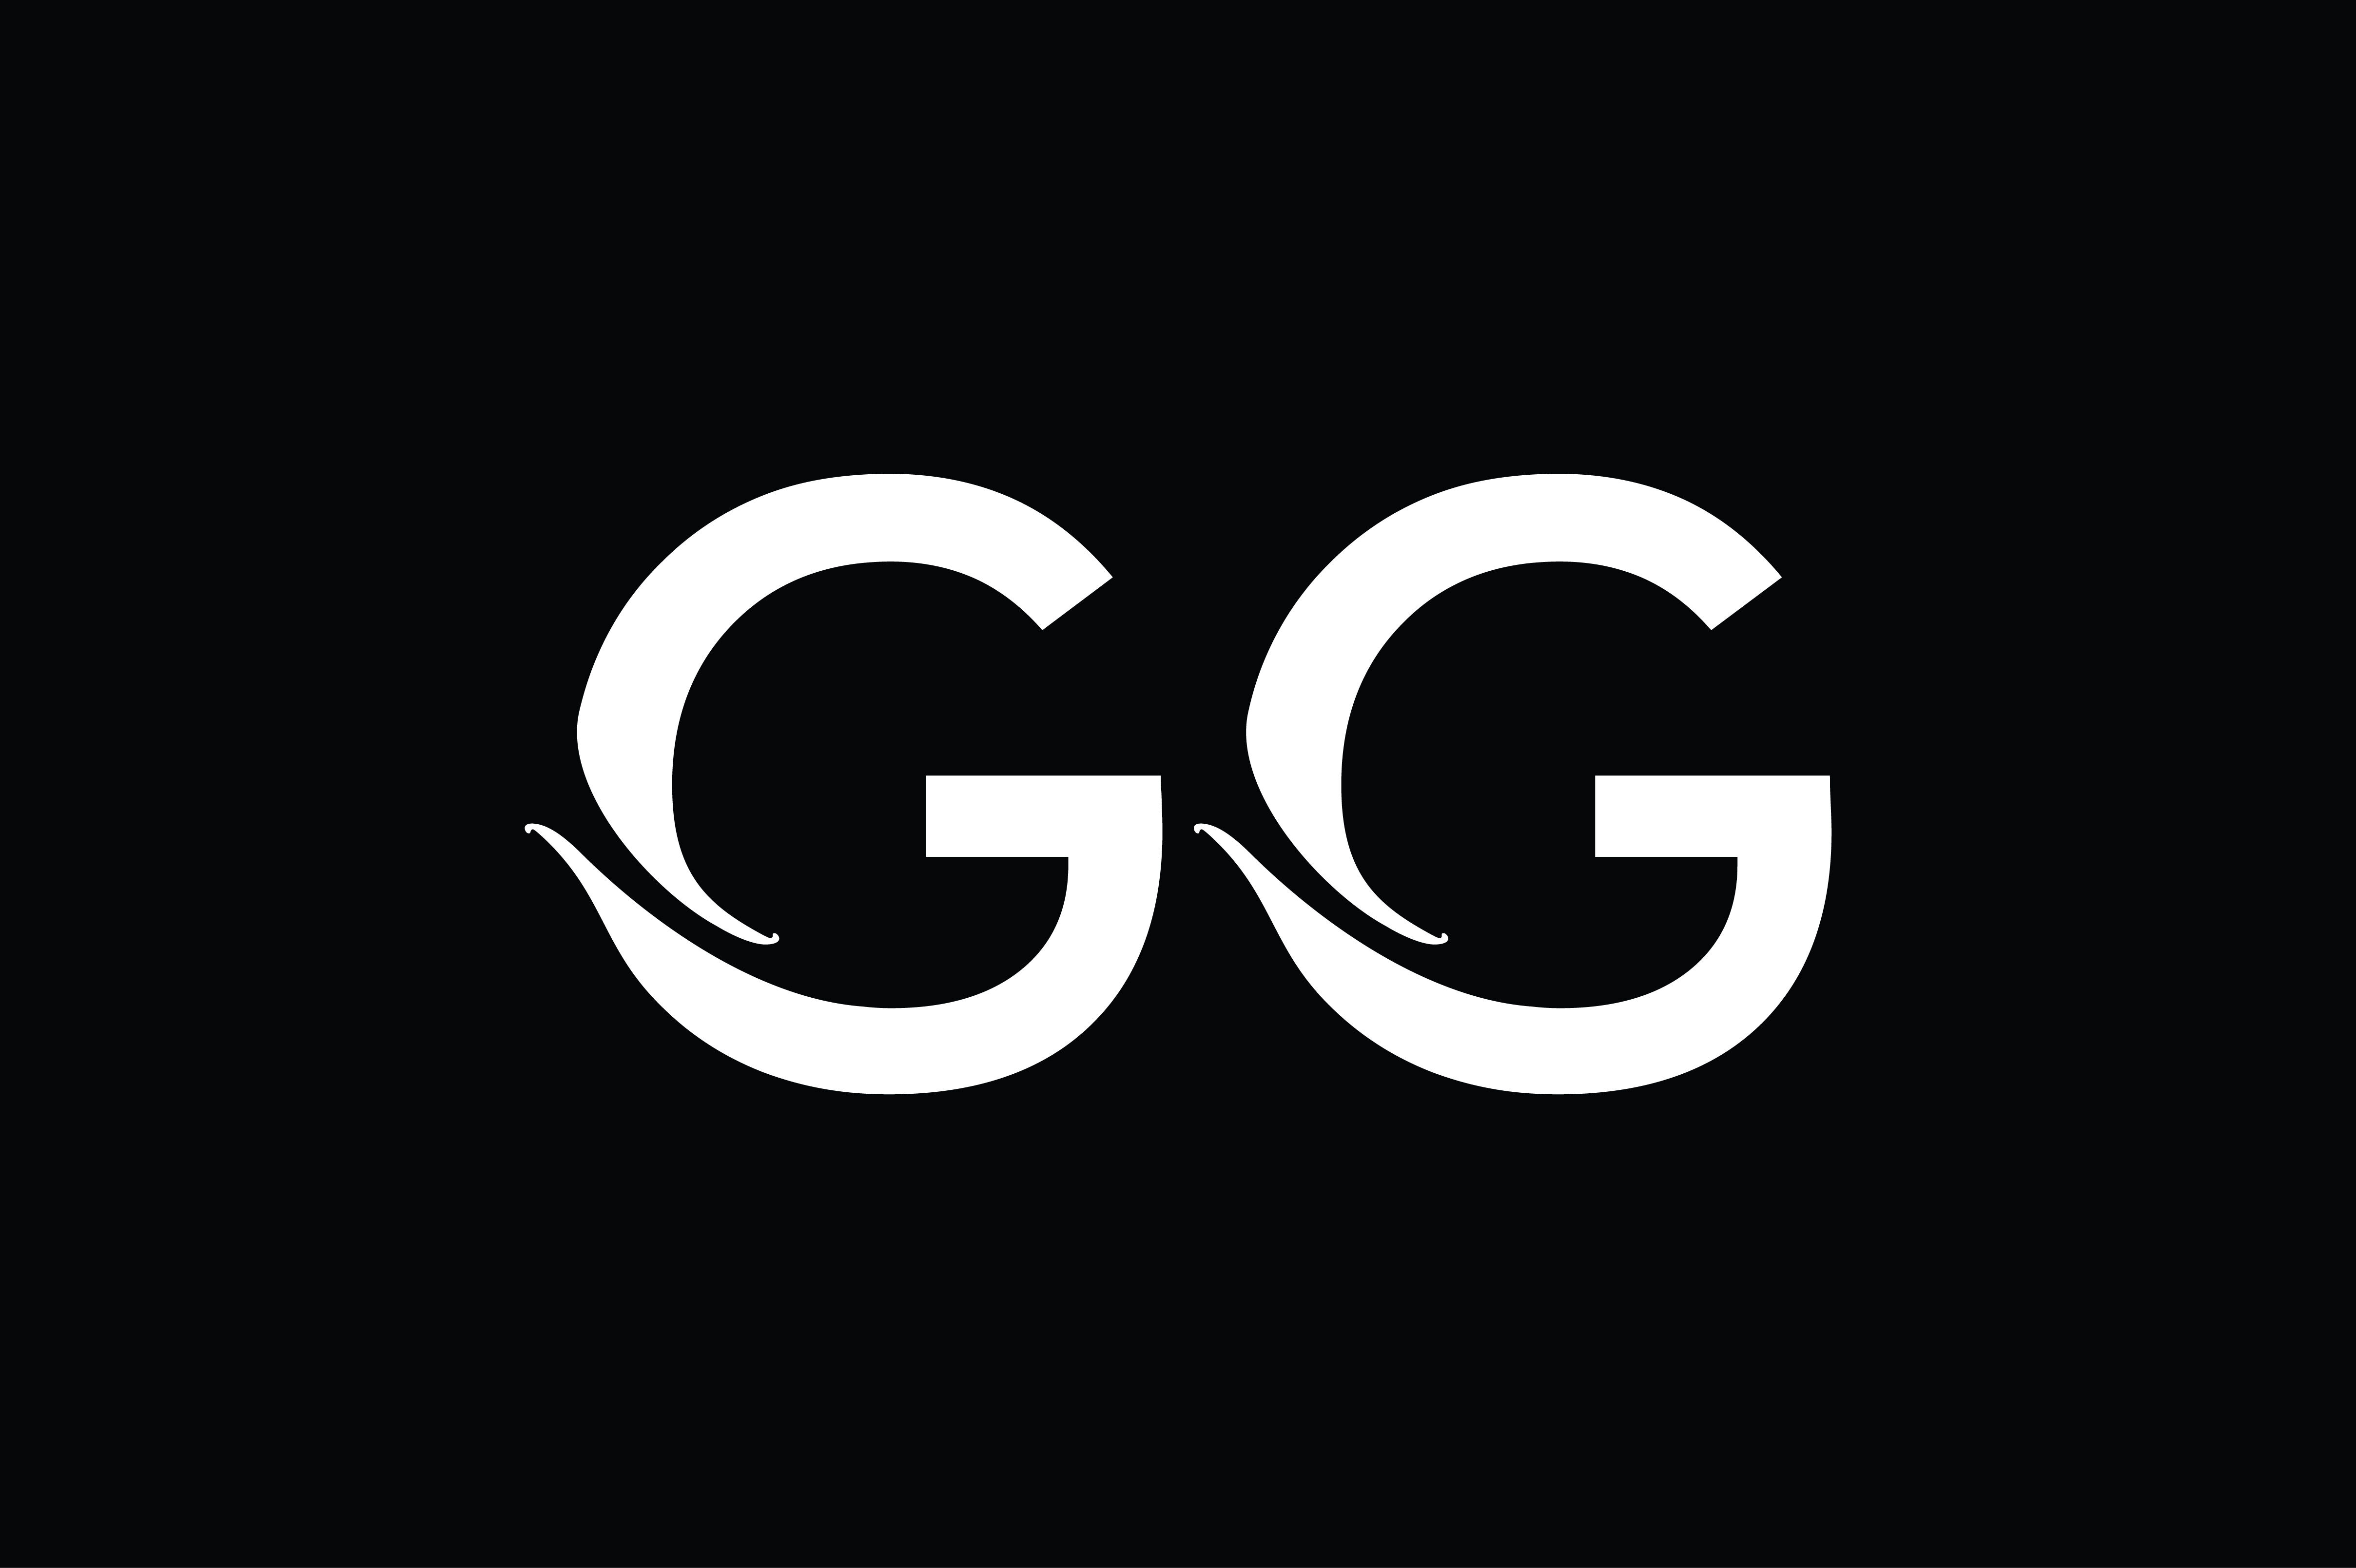 Gg script. GC лого. Gg значок. Фирменный знак gg. Клан gg.